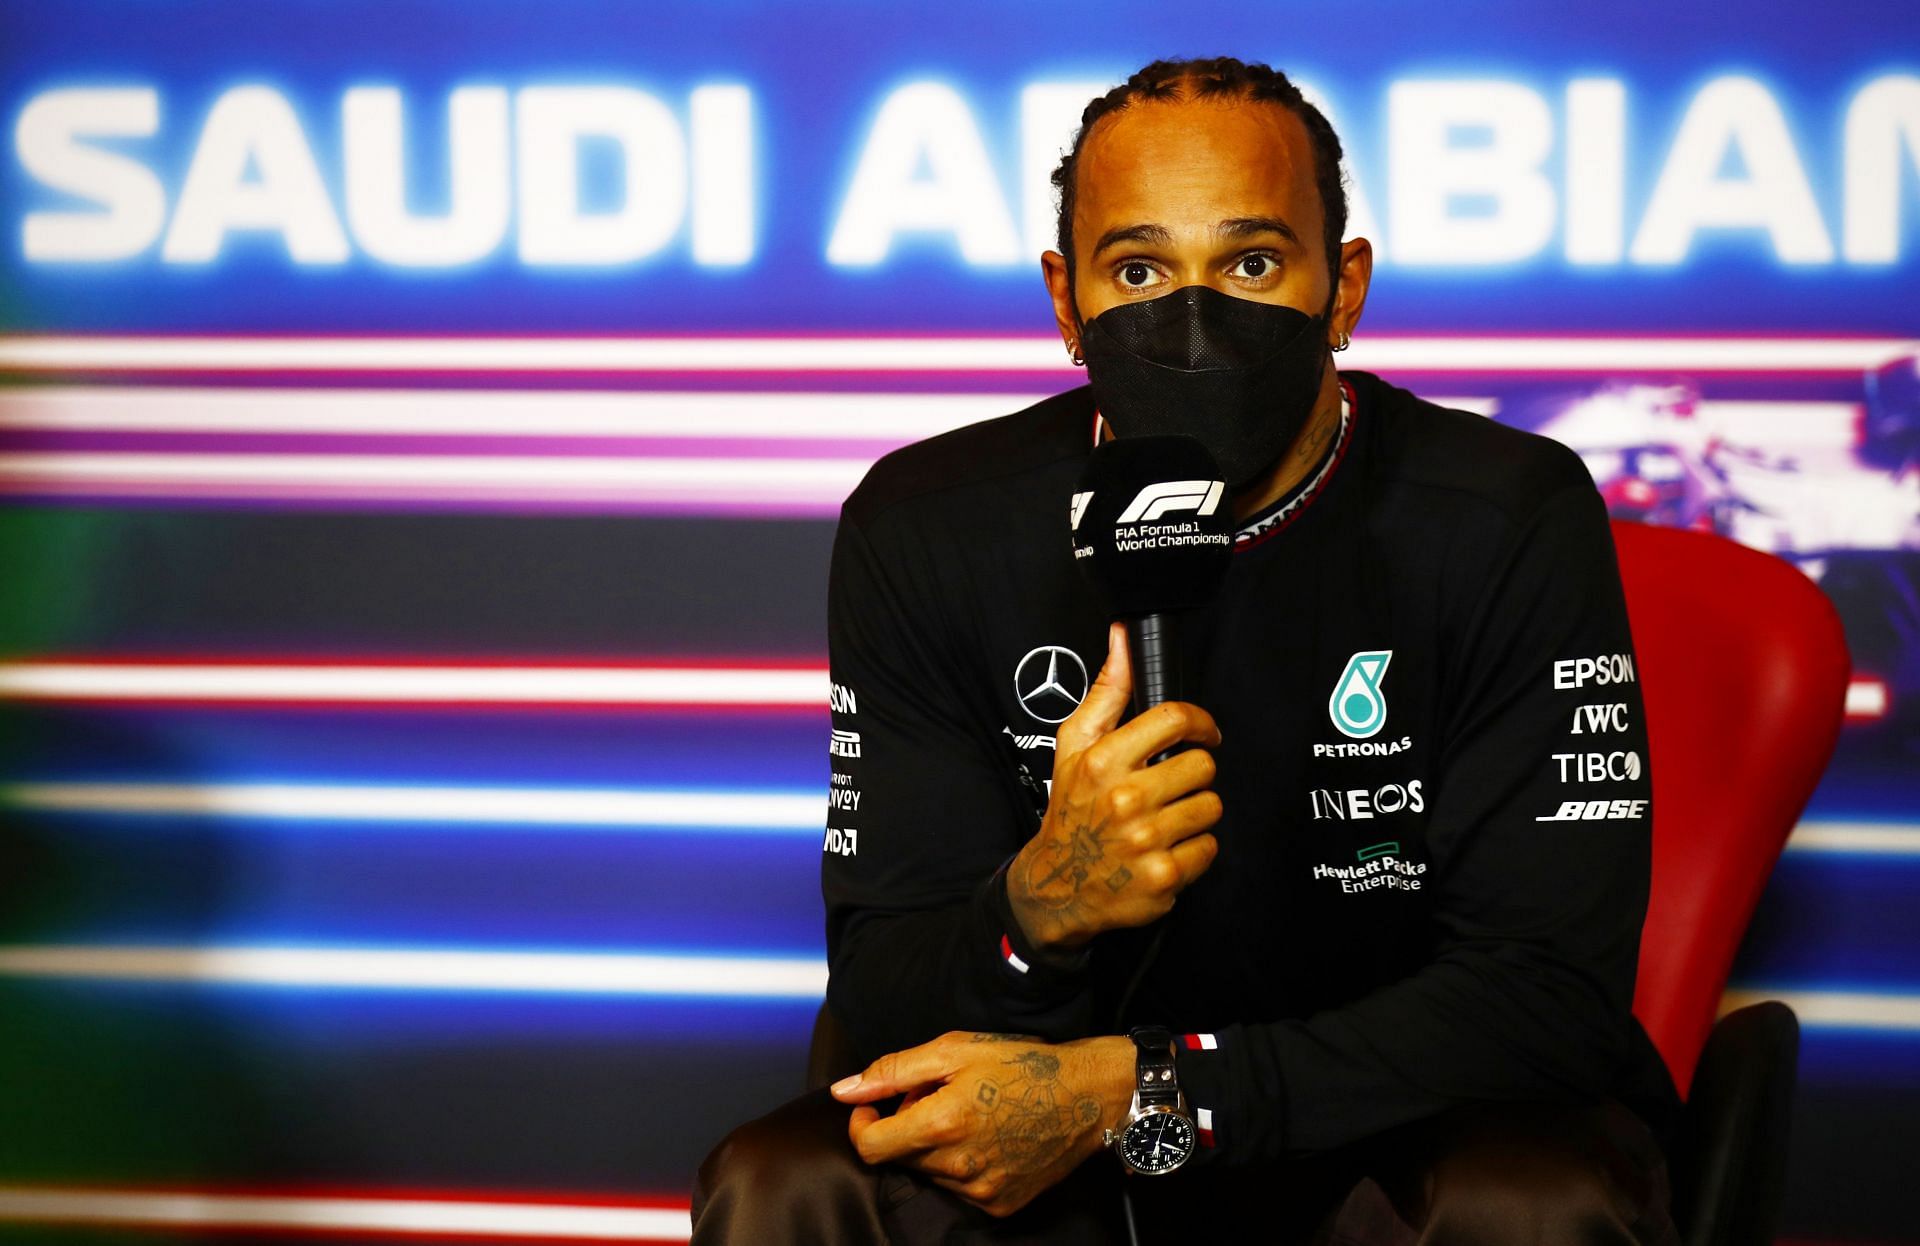 Race winner Lewis Hamilton talks in the press conference after the 2021 Saudi Arabian Grand Prix.